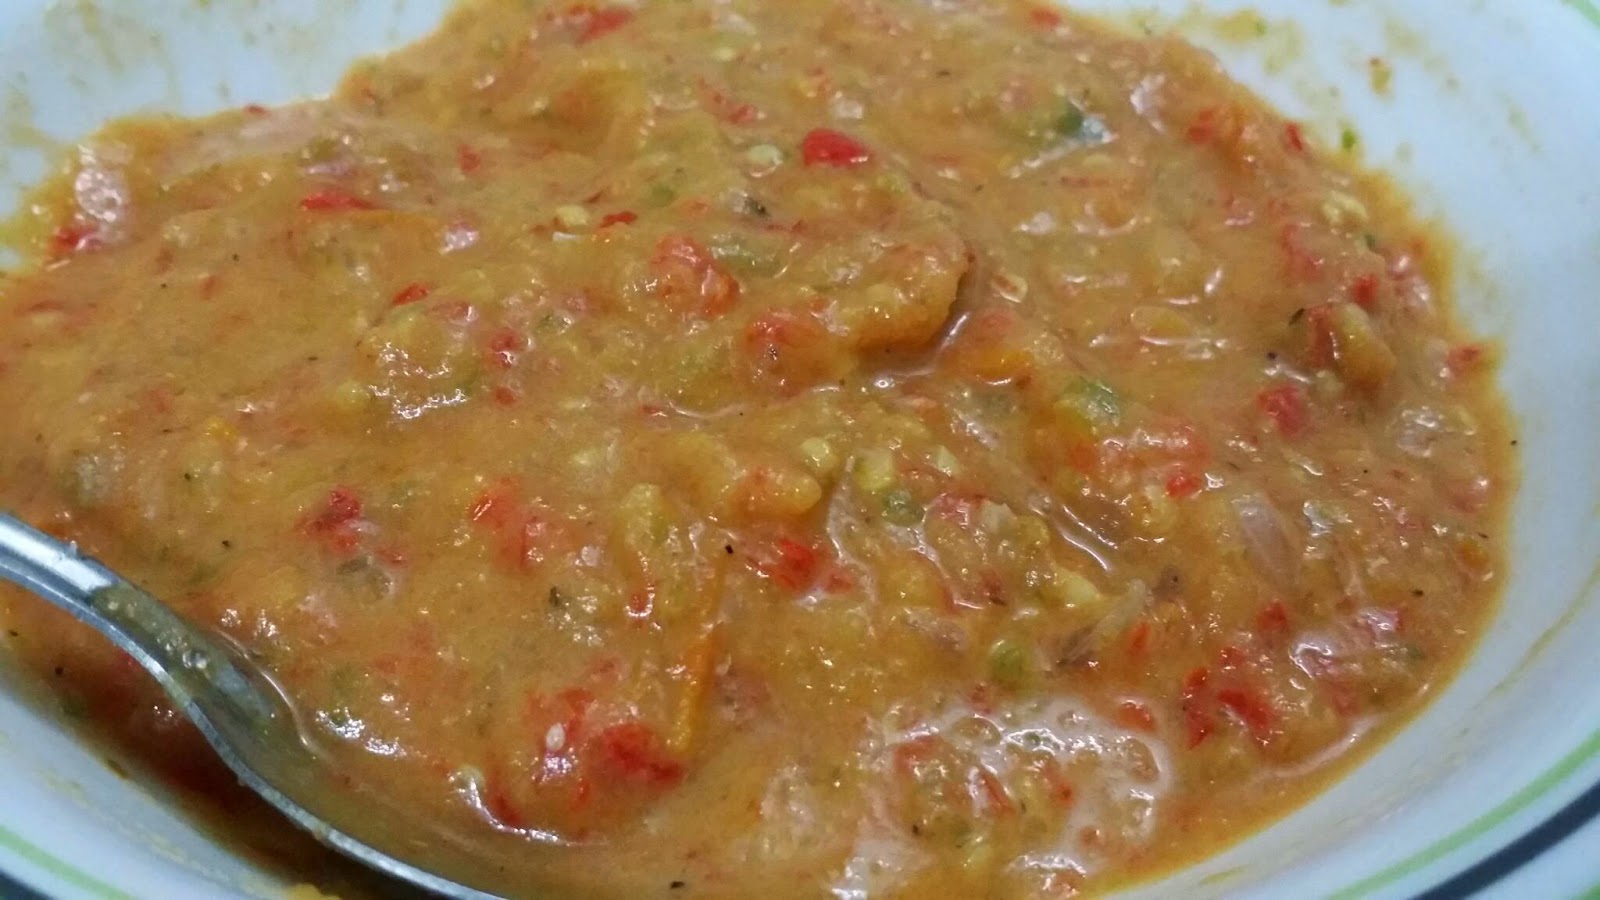 ZULFAZA LOVES COOKING: Sambal tomato goreng